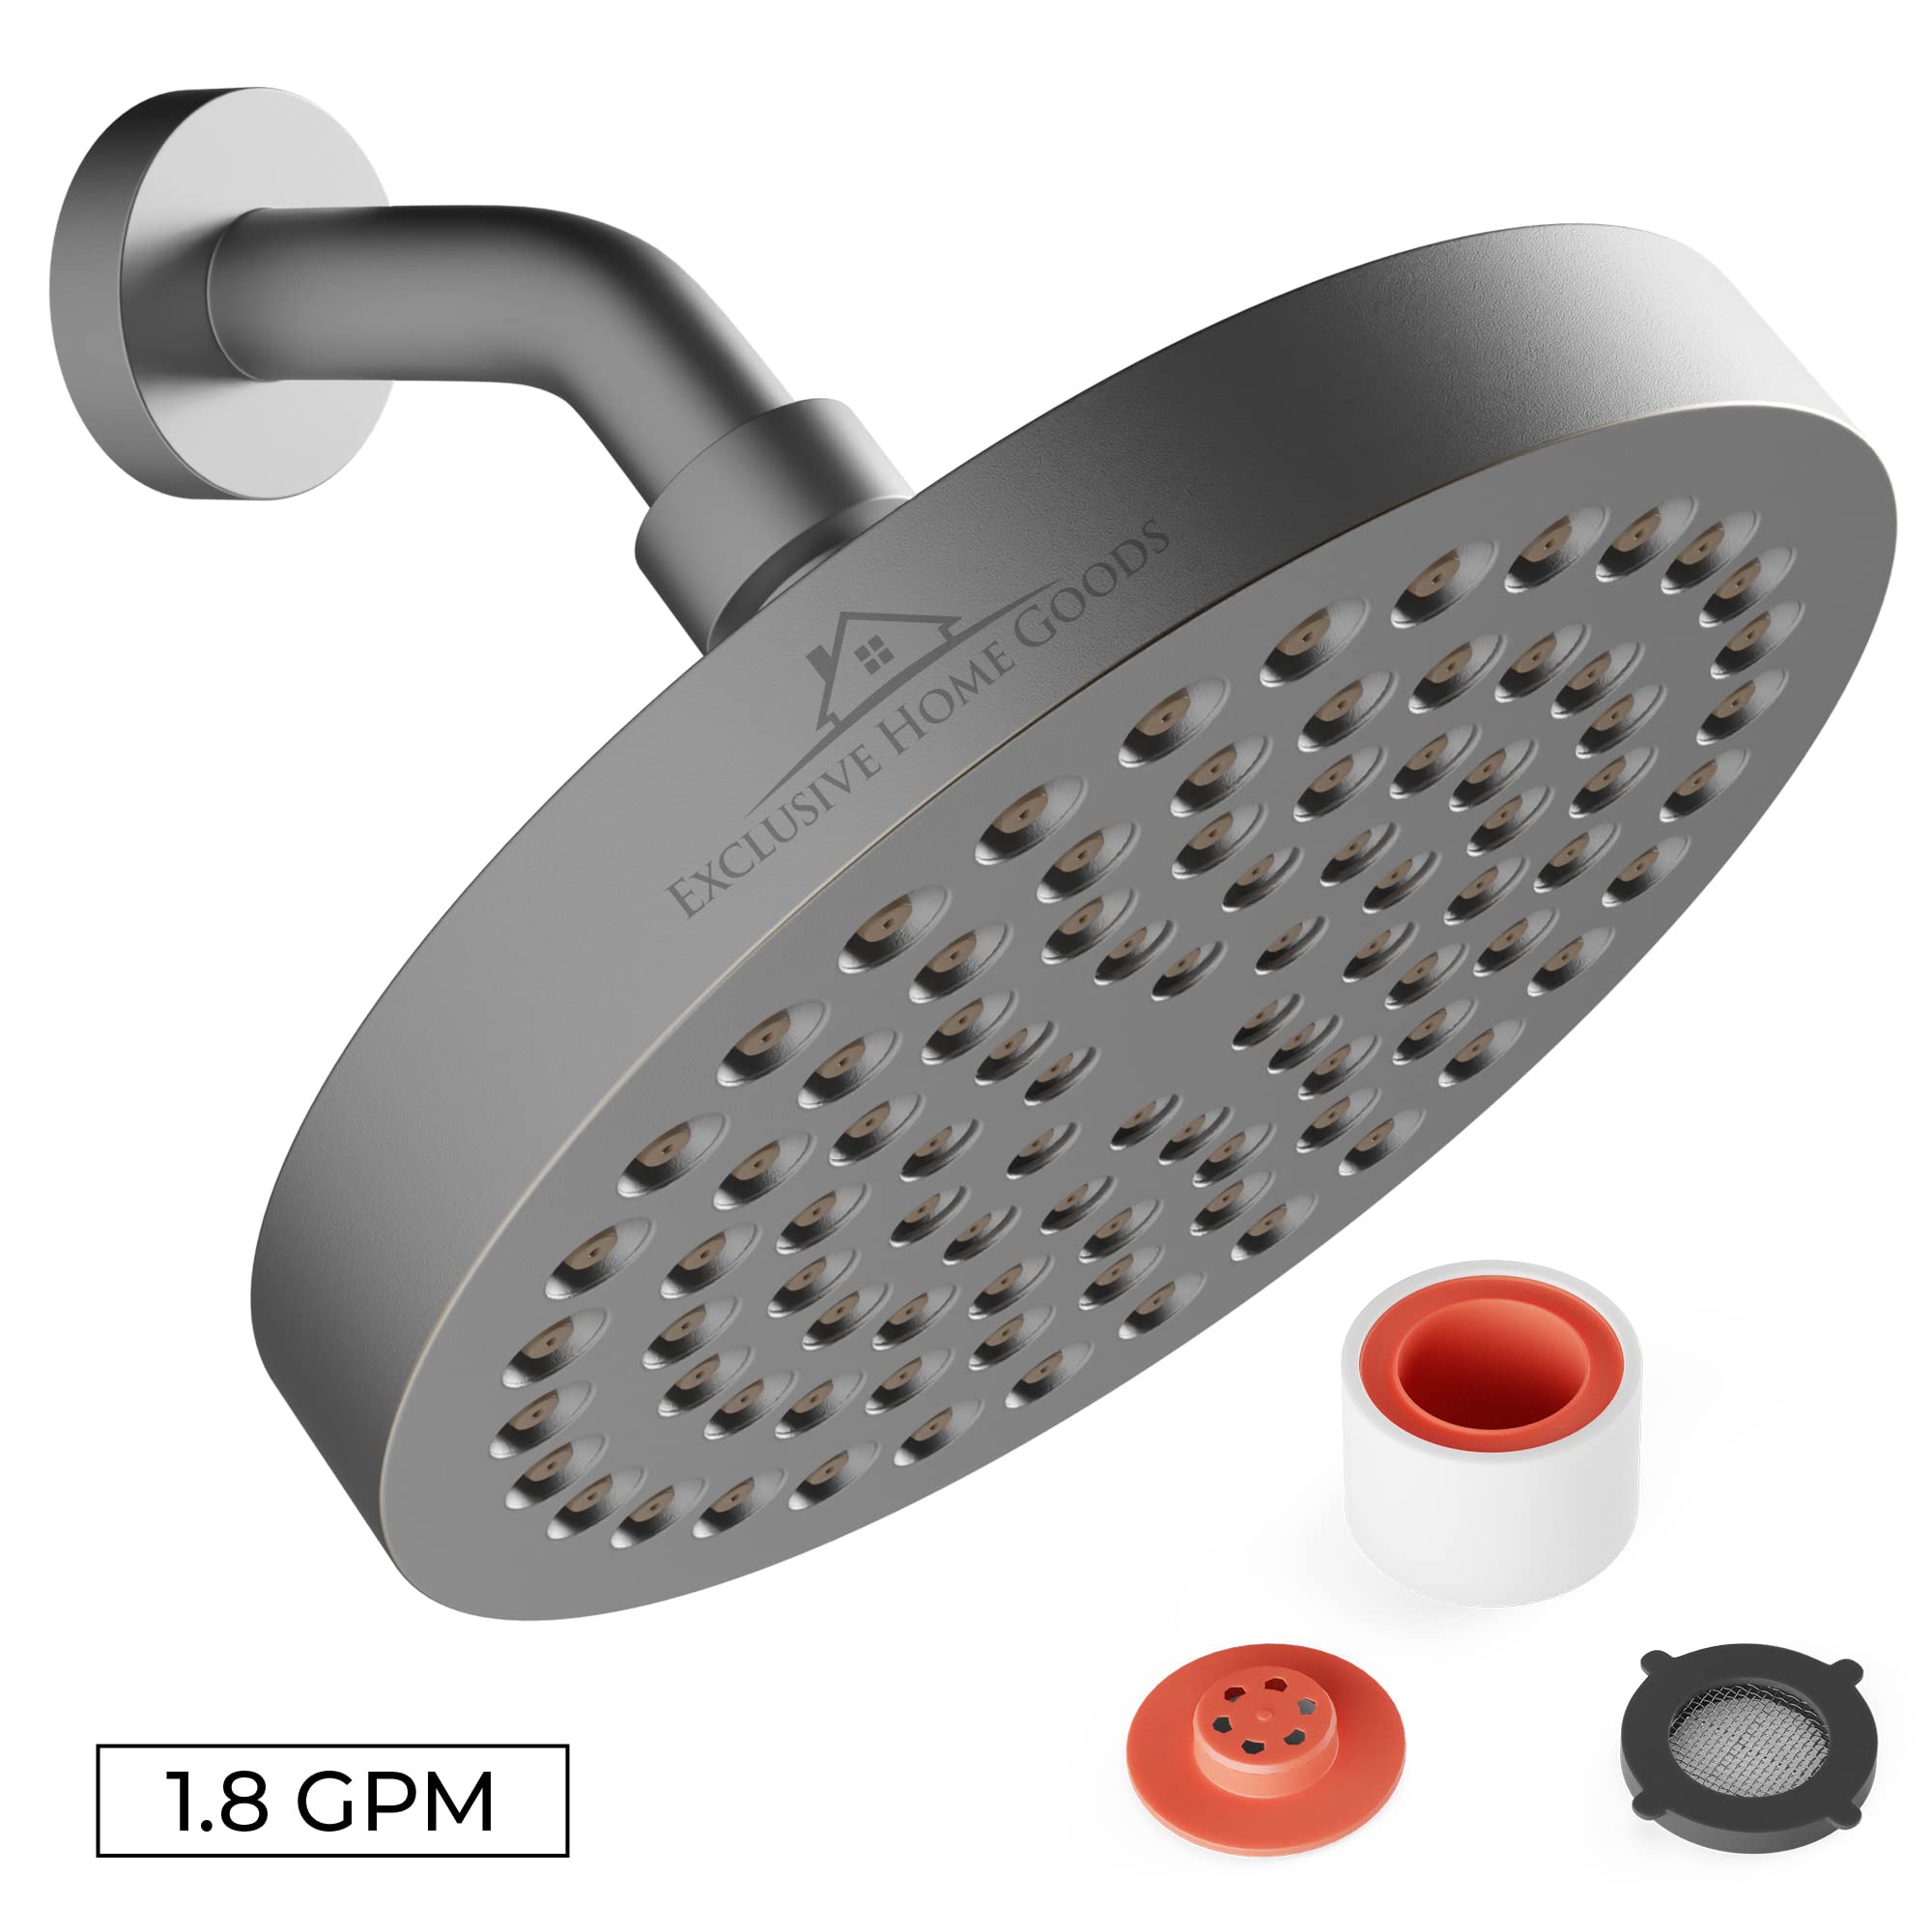 Rainfall Shower Head - 6" High Pressure Shower Heads - 1.8 GPM Shower Heads with Anti-Clog 90 Rubber Jets - 360� Rotation Adjustable Shower Head - Rustproof Bathroom Shower Head - Matte Charcoal  - Like New